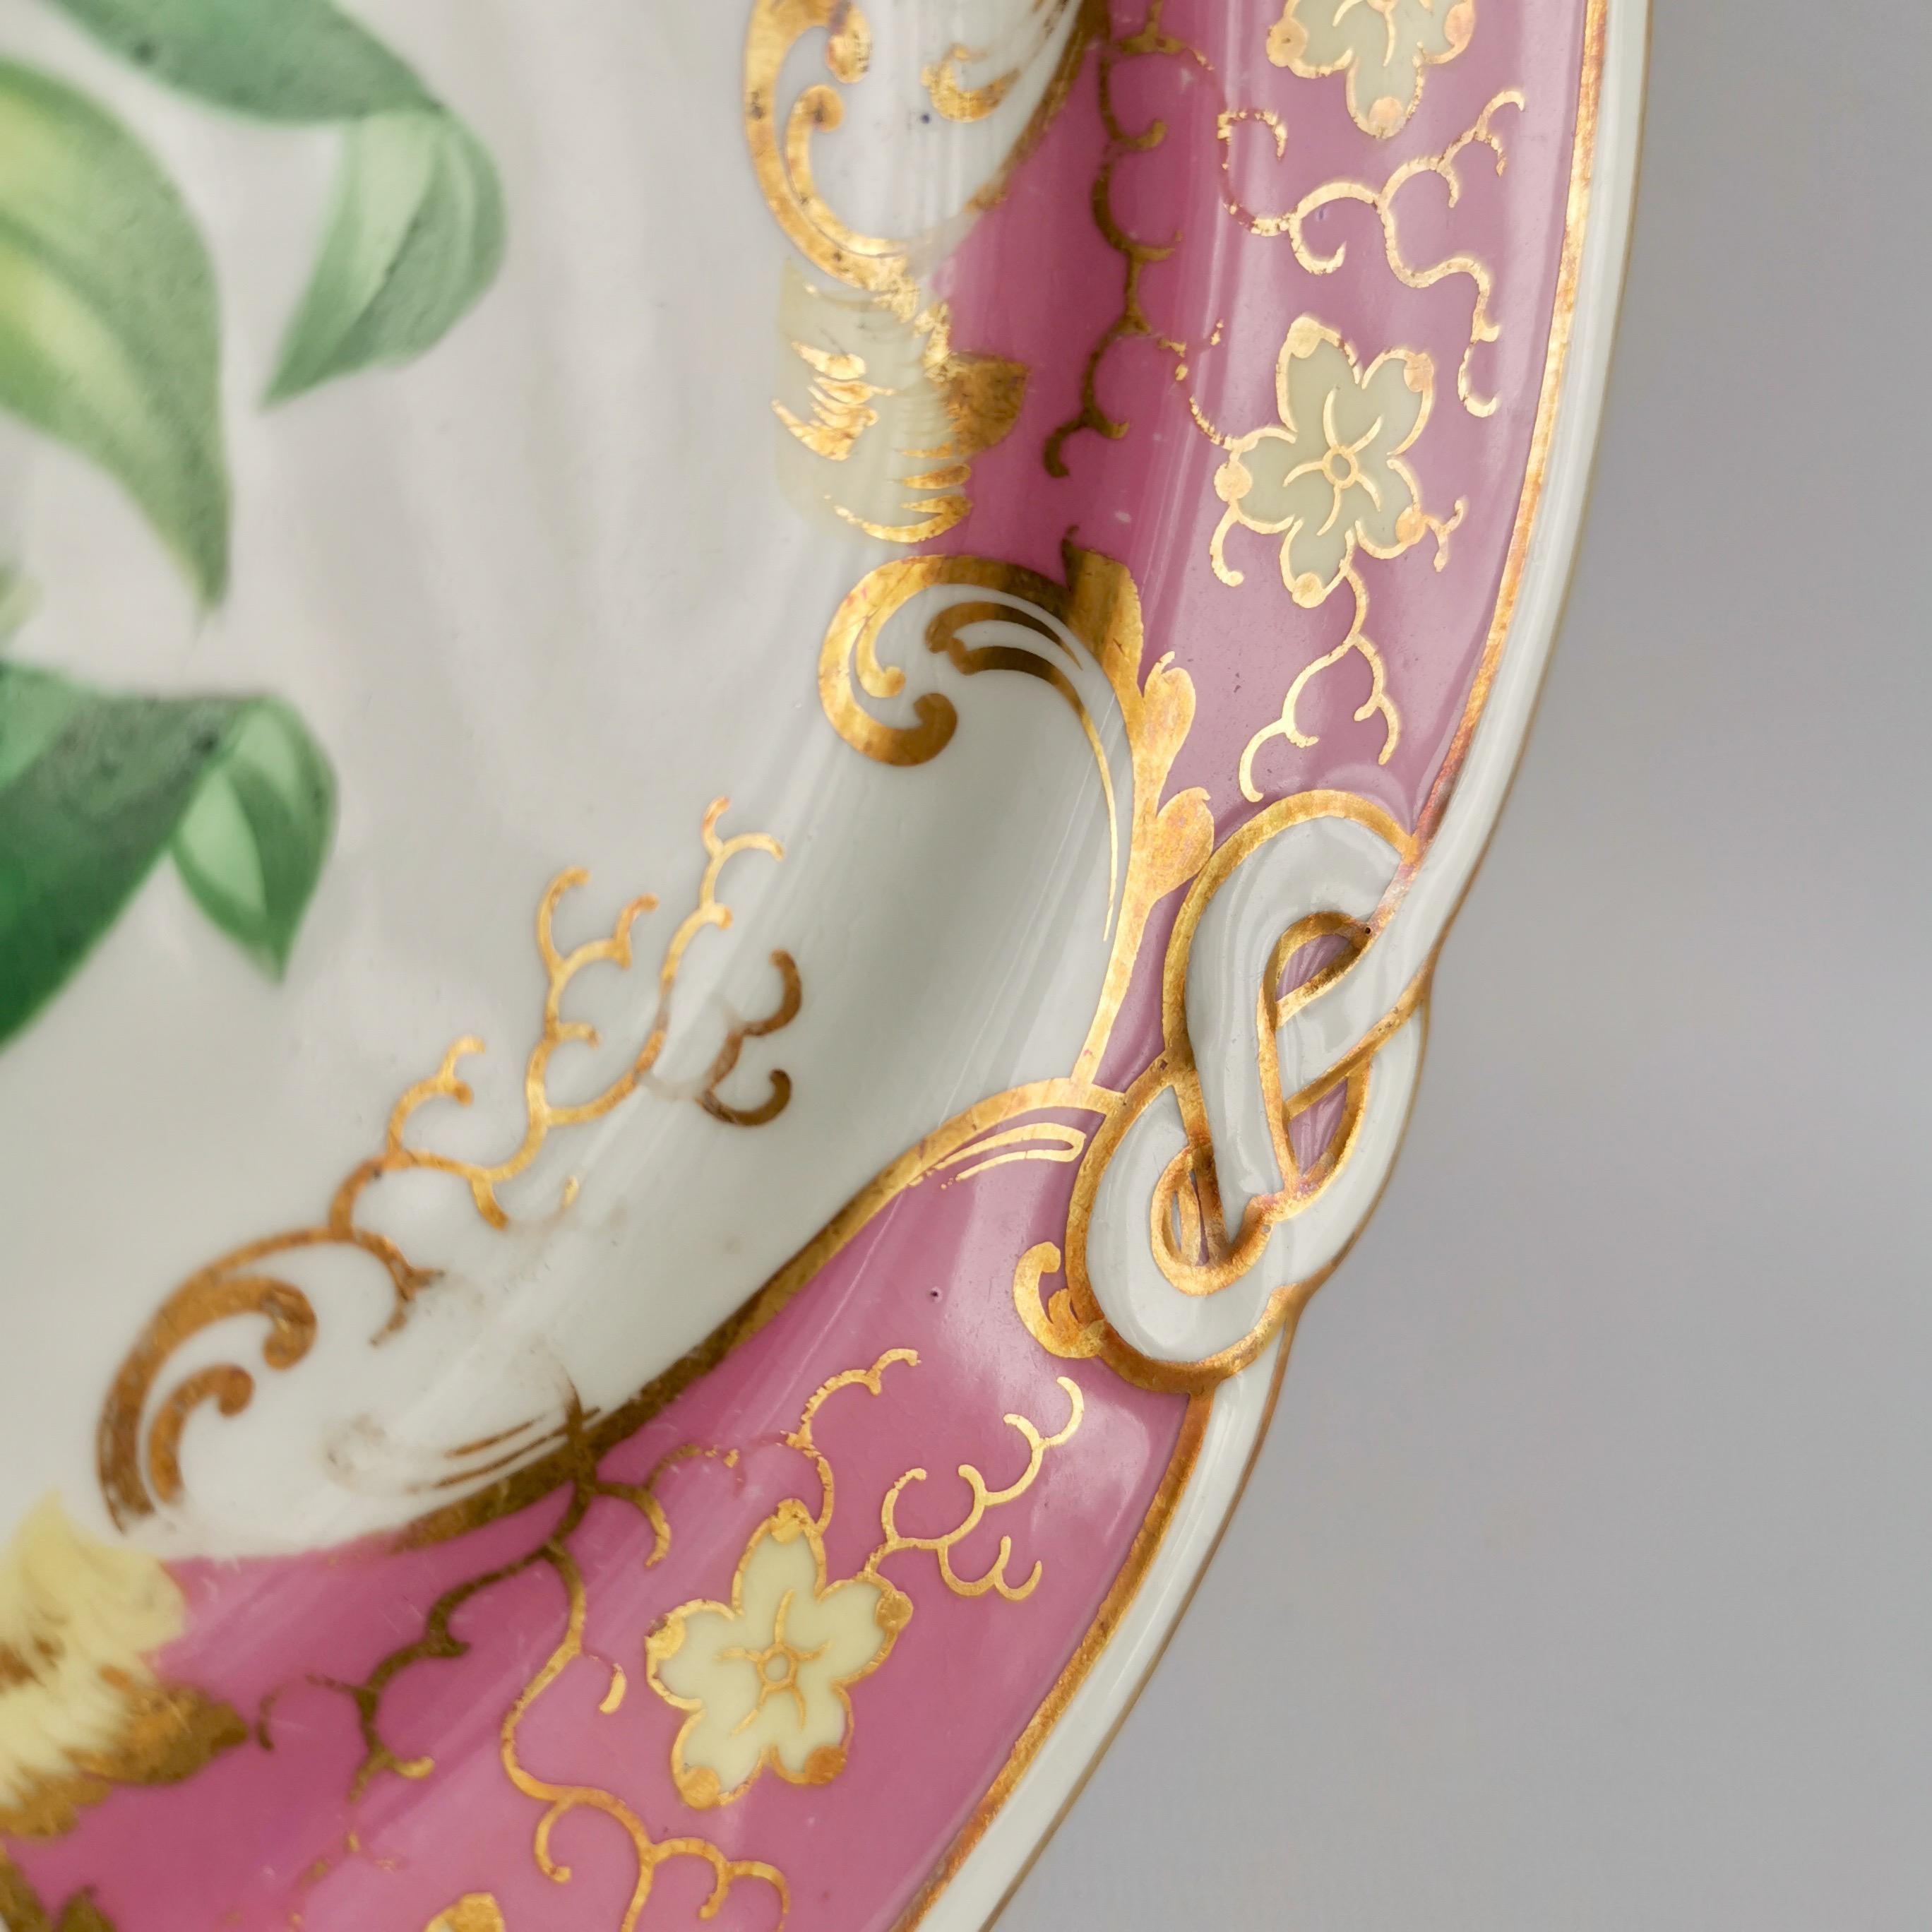 Samuel Alcock Small Porcelain Dessert Set, Pink with Flowers, Victorian 1854 8